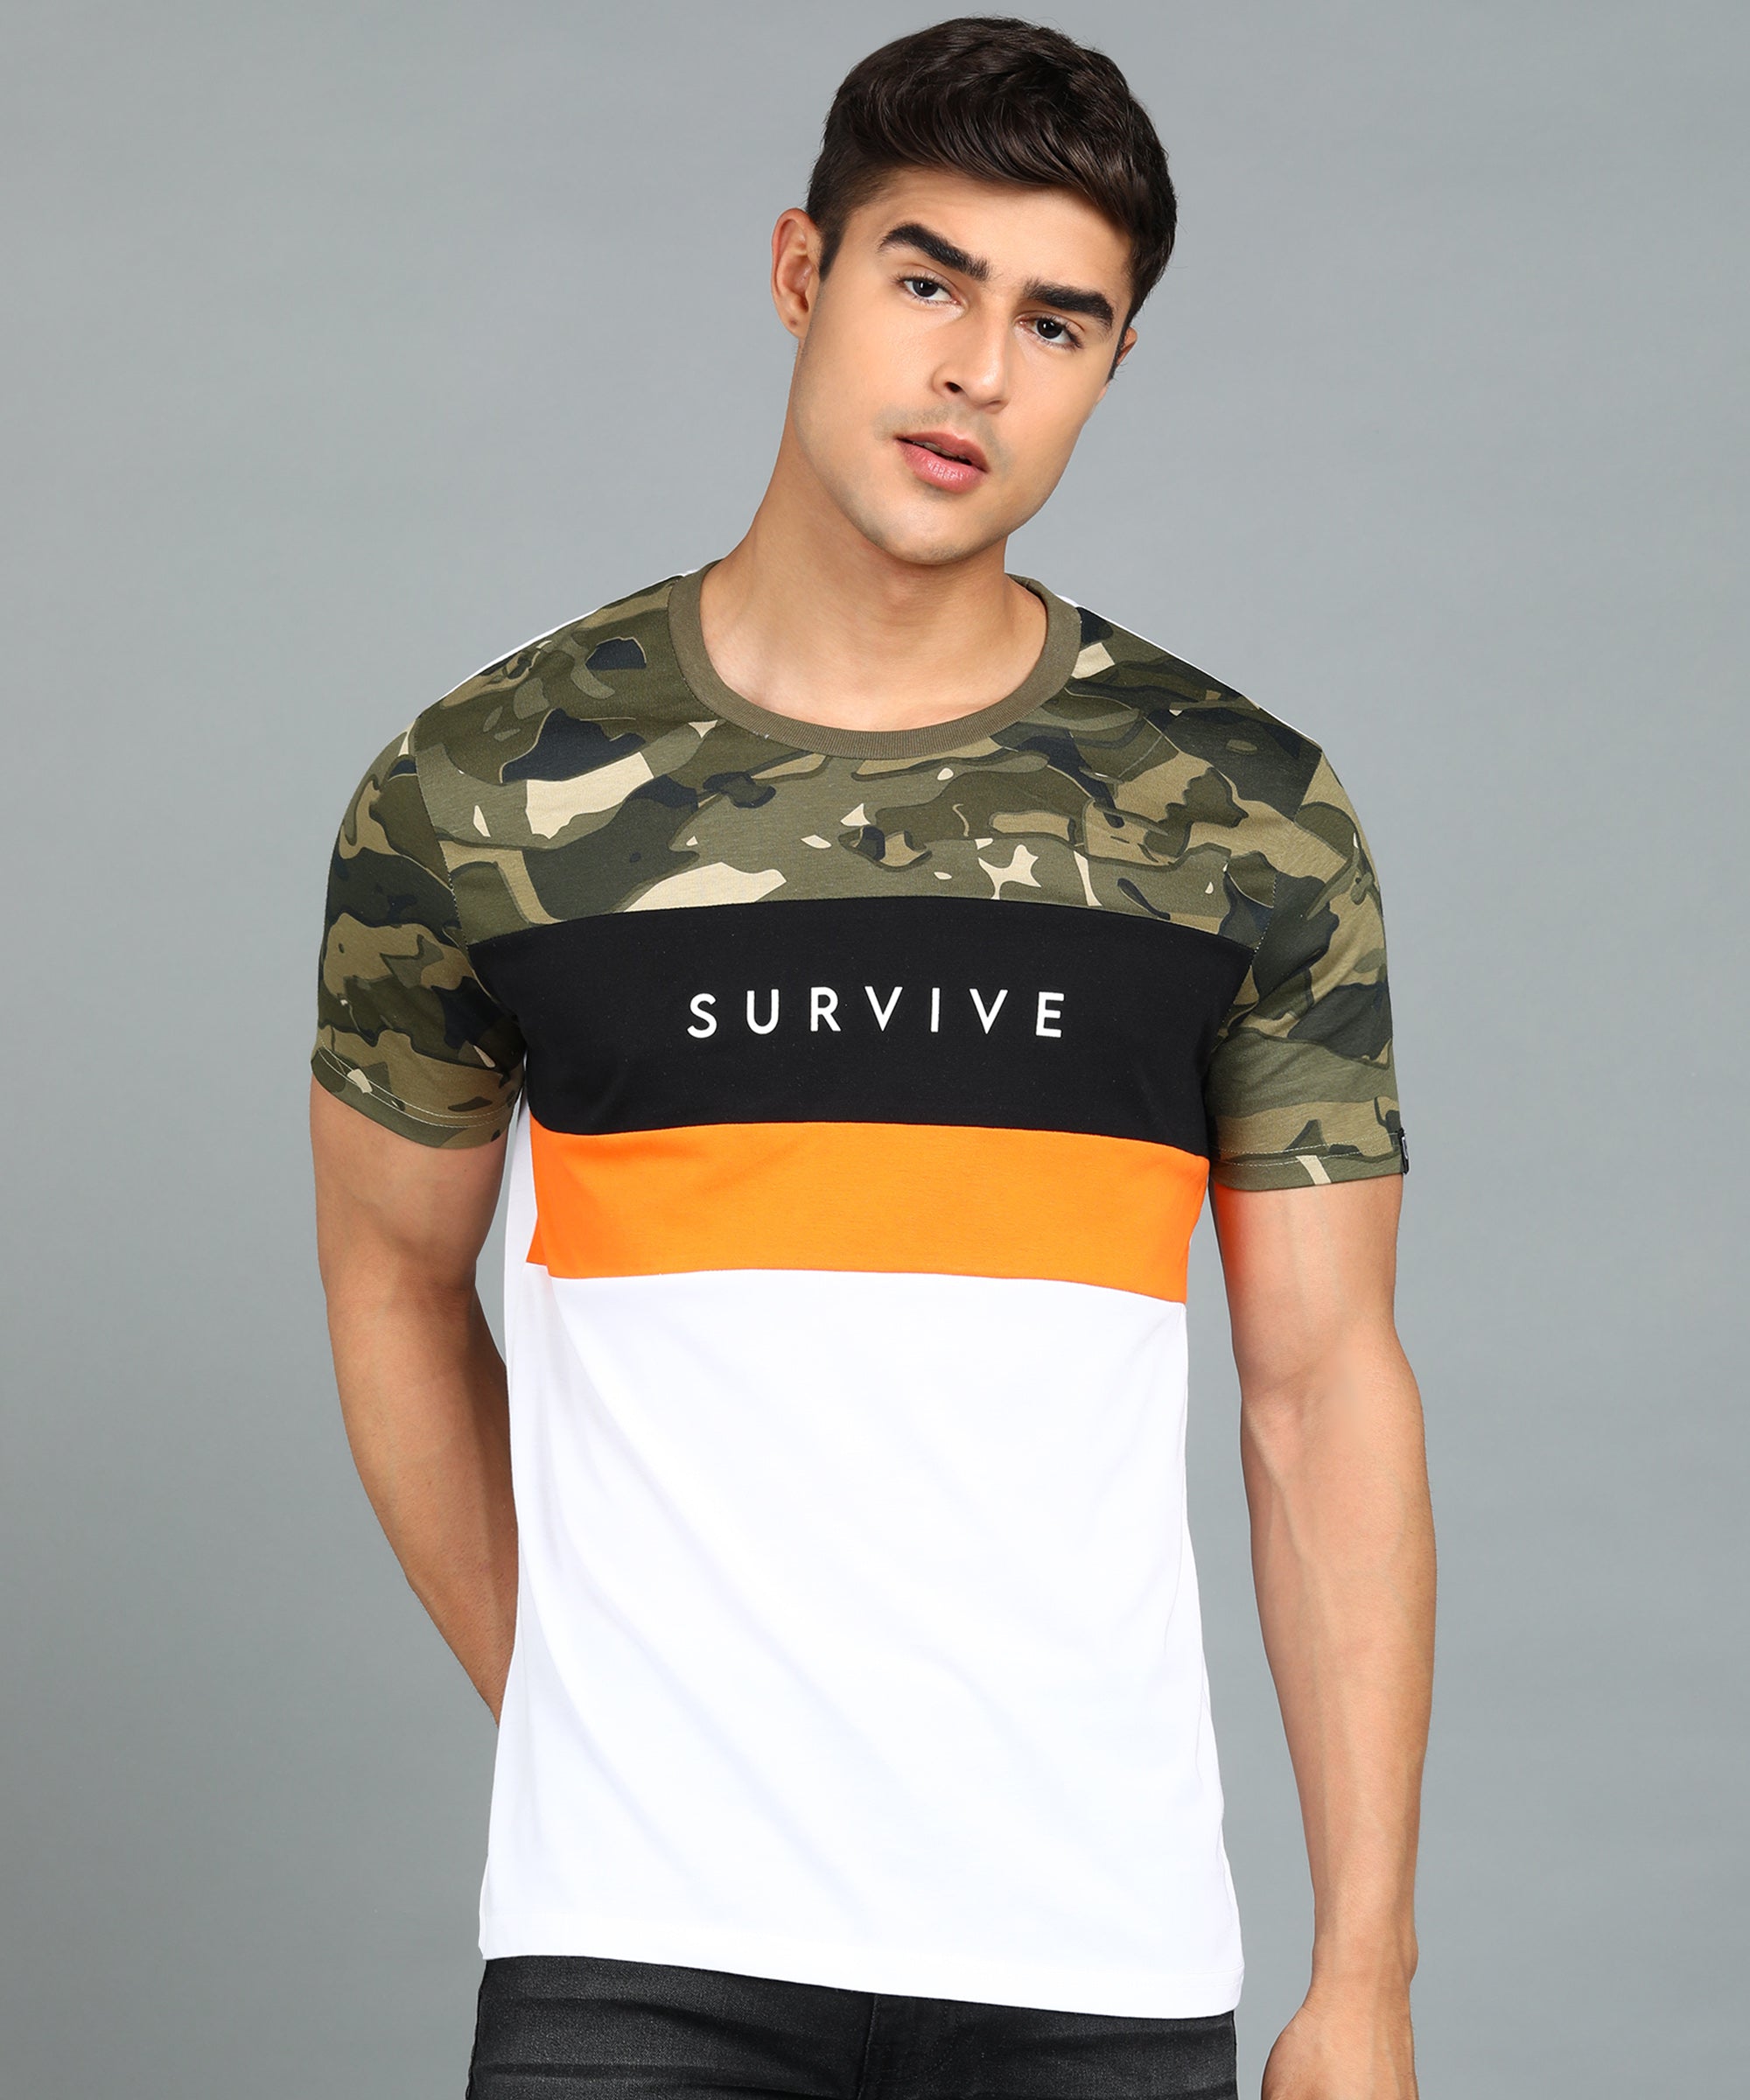 Urbano Fashion Men's White, Orange, Black Military Camouflage Printed Slim Fit Half Sleeve Cotton T-Shirt